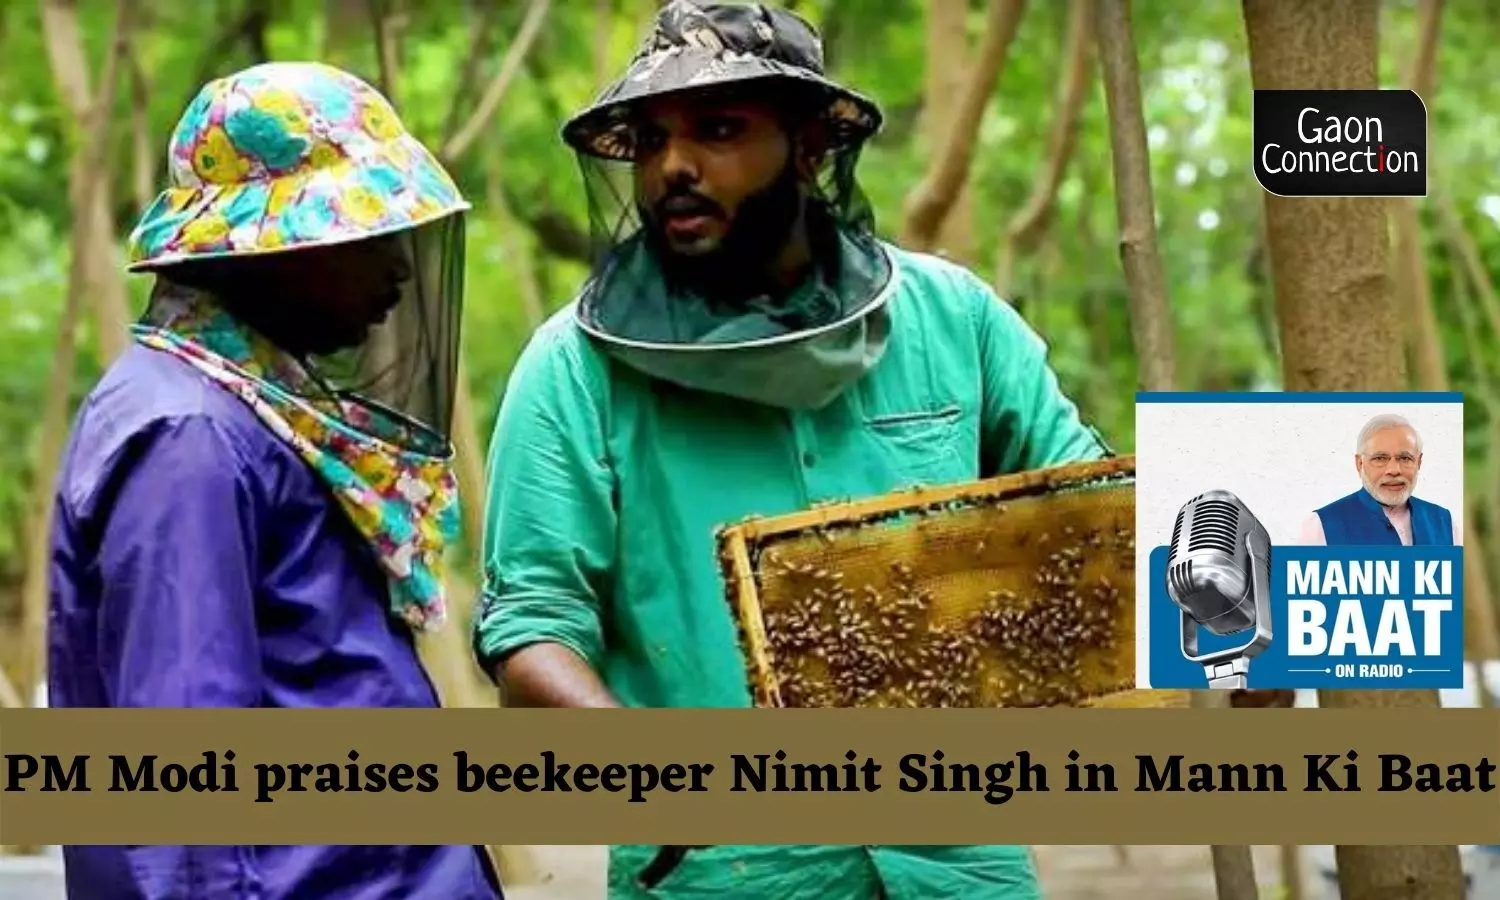 PM Modi praises UPs honey maker Nimit Singh in Mann Ki Baat radio show